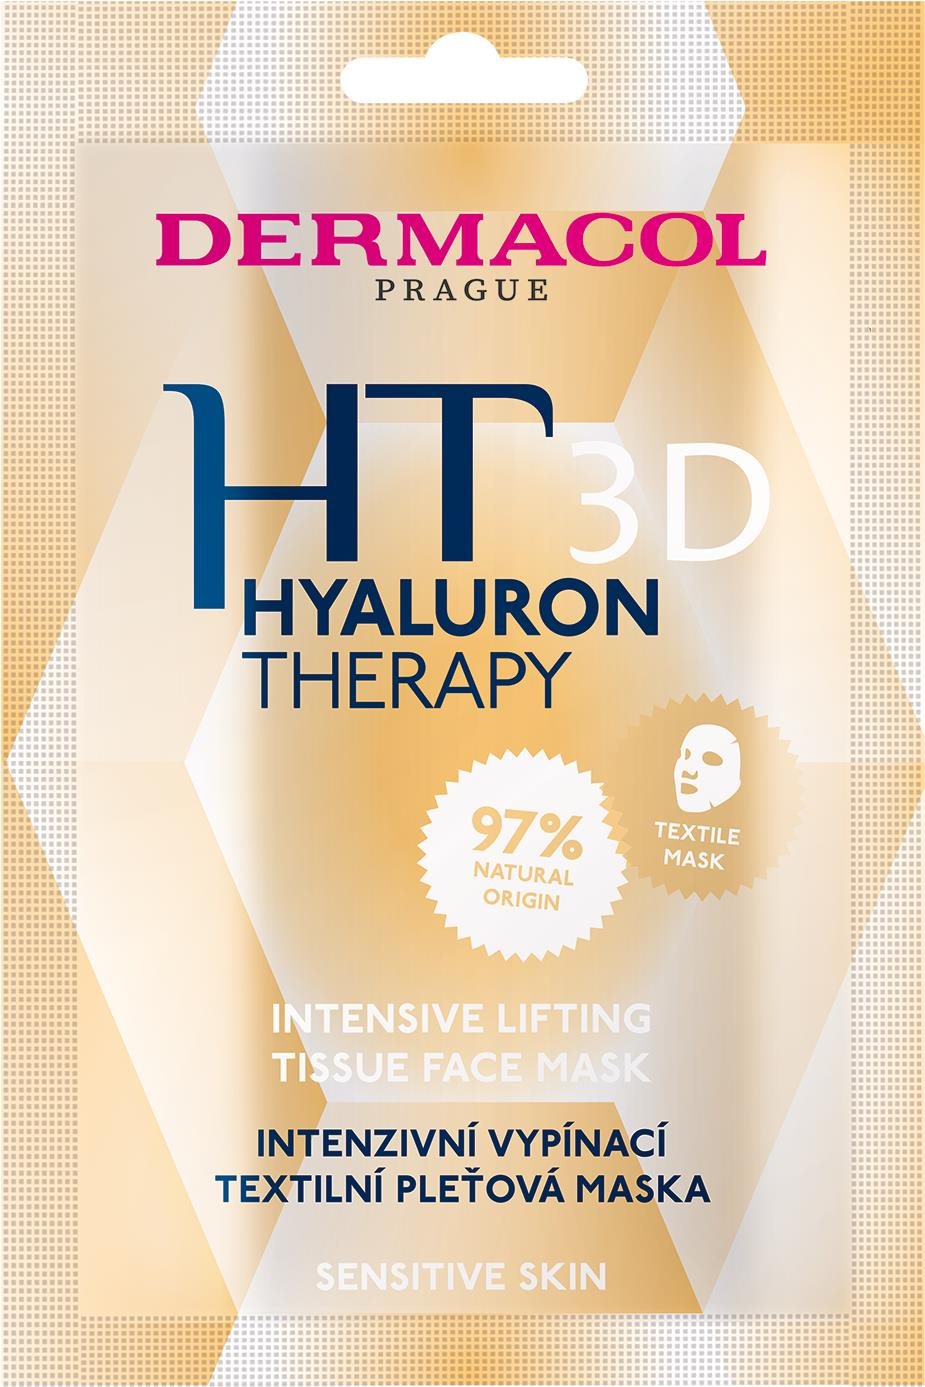 DERMACOL Hyaluron Therapy 3D Textil maszk